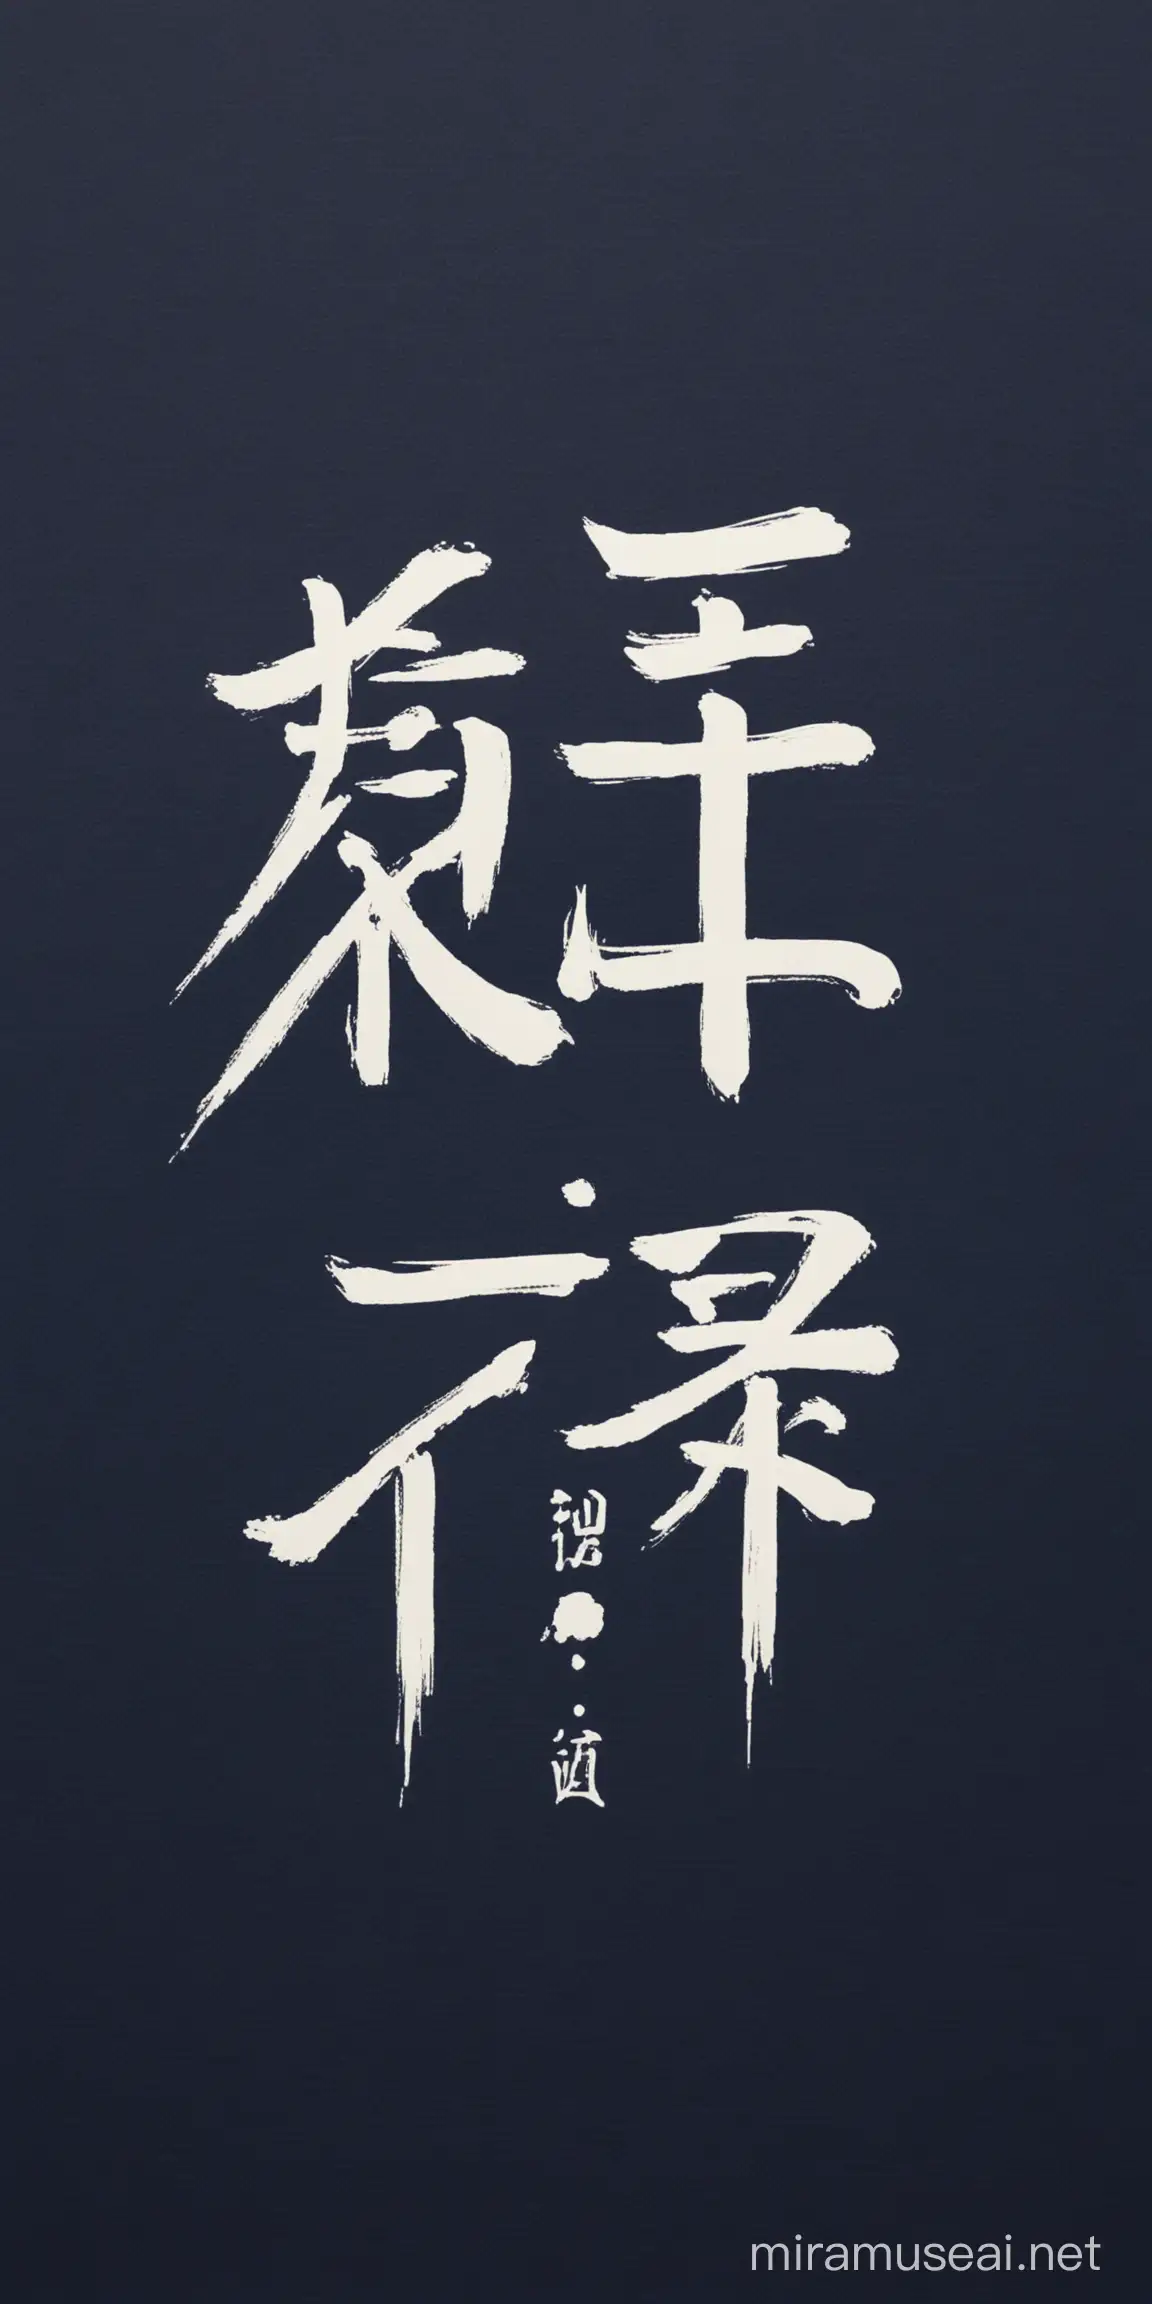 Tulisan huruf jepang yang artinya Qii dengan background biru polos gelap